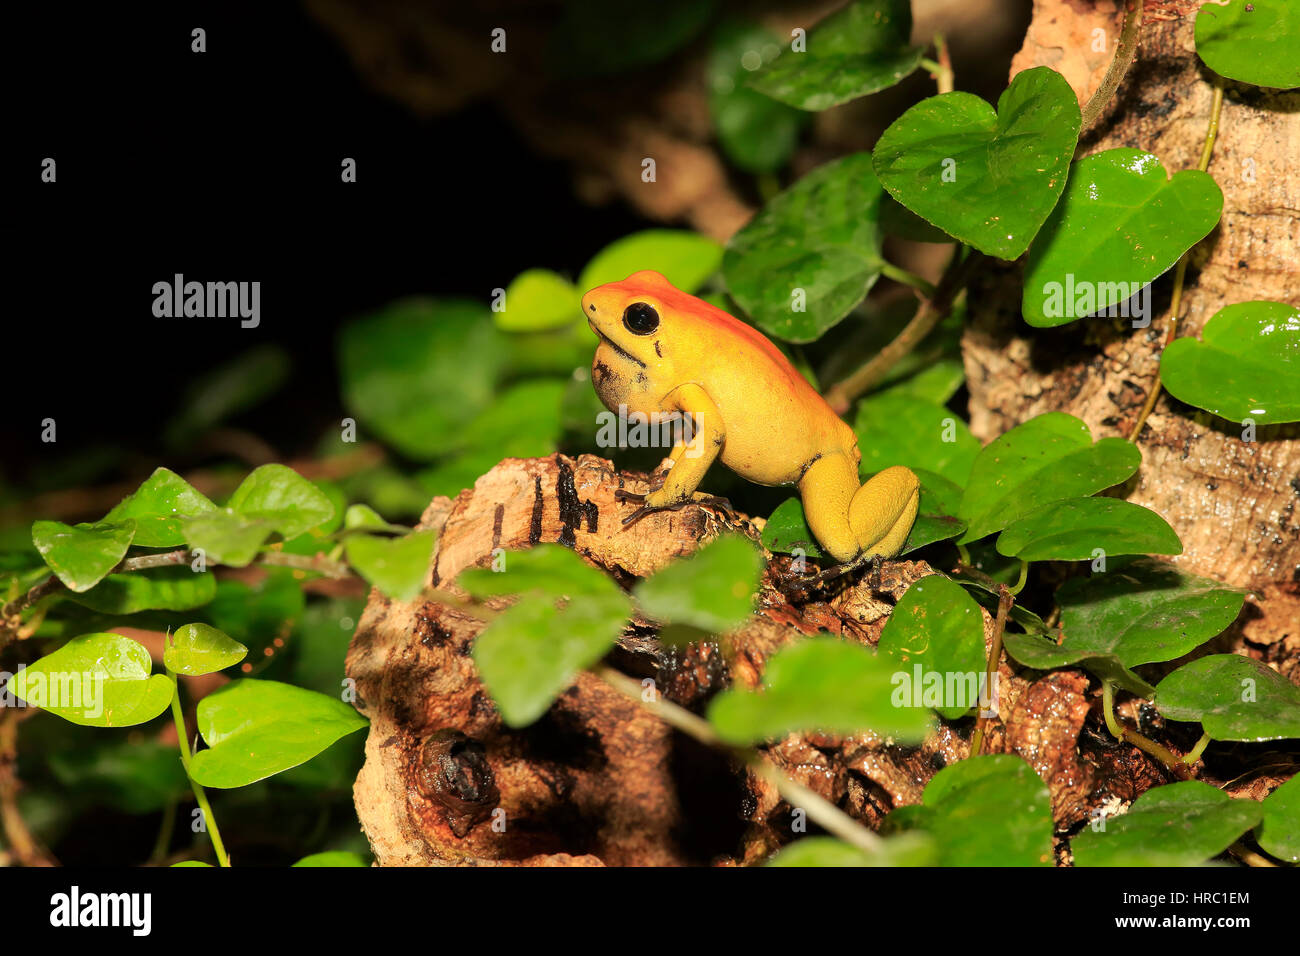 Black Legged Dart Frog, (Phyllobates bicolor), adult, alert, calling, South America Stock Photo